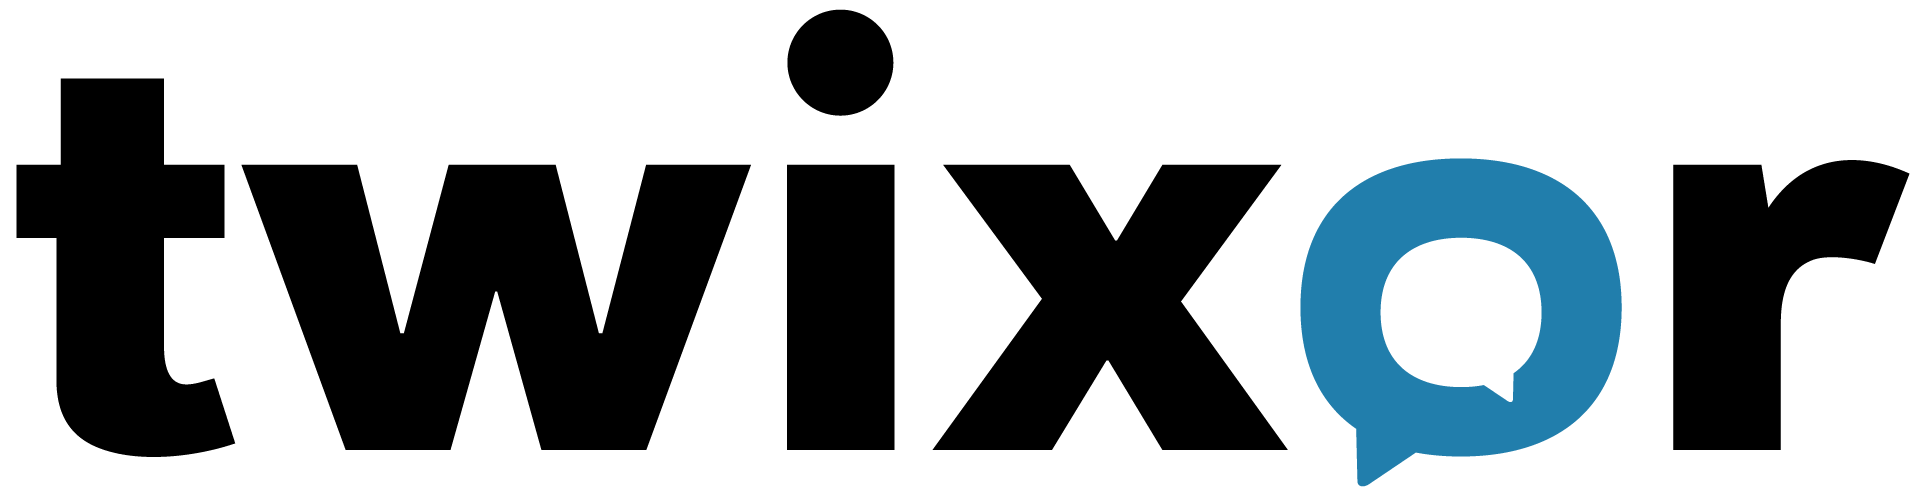 Twixor Pte Ltd logo